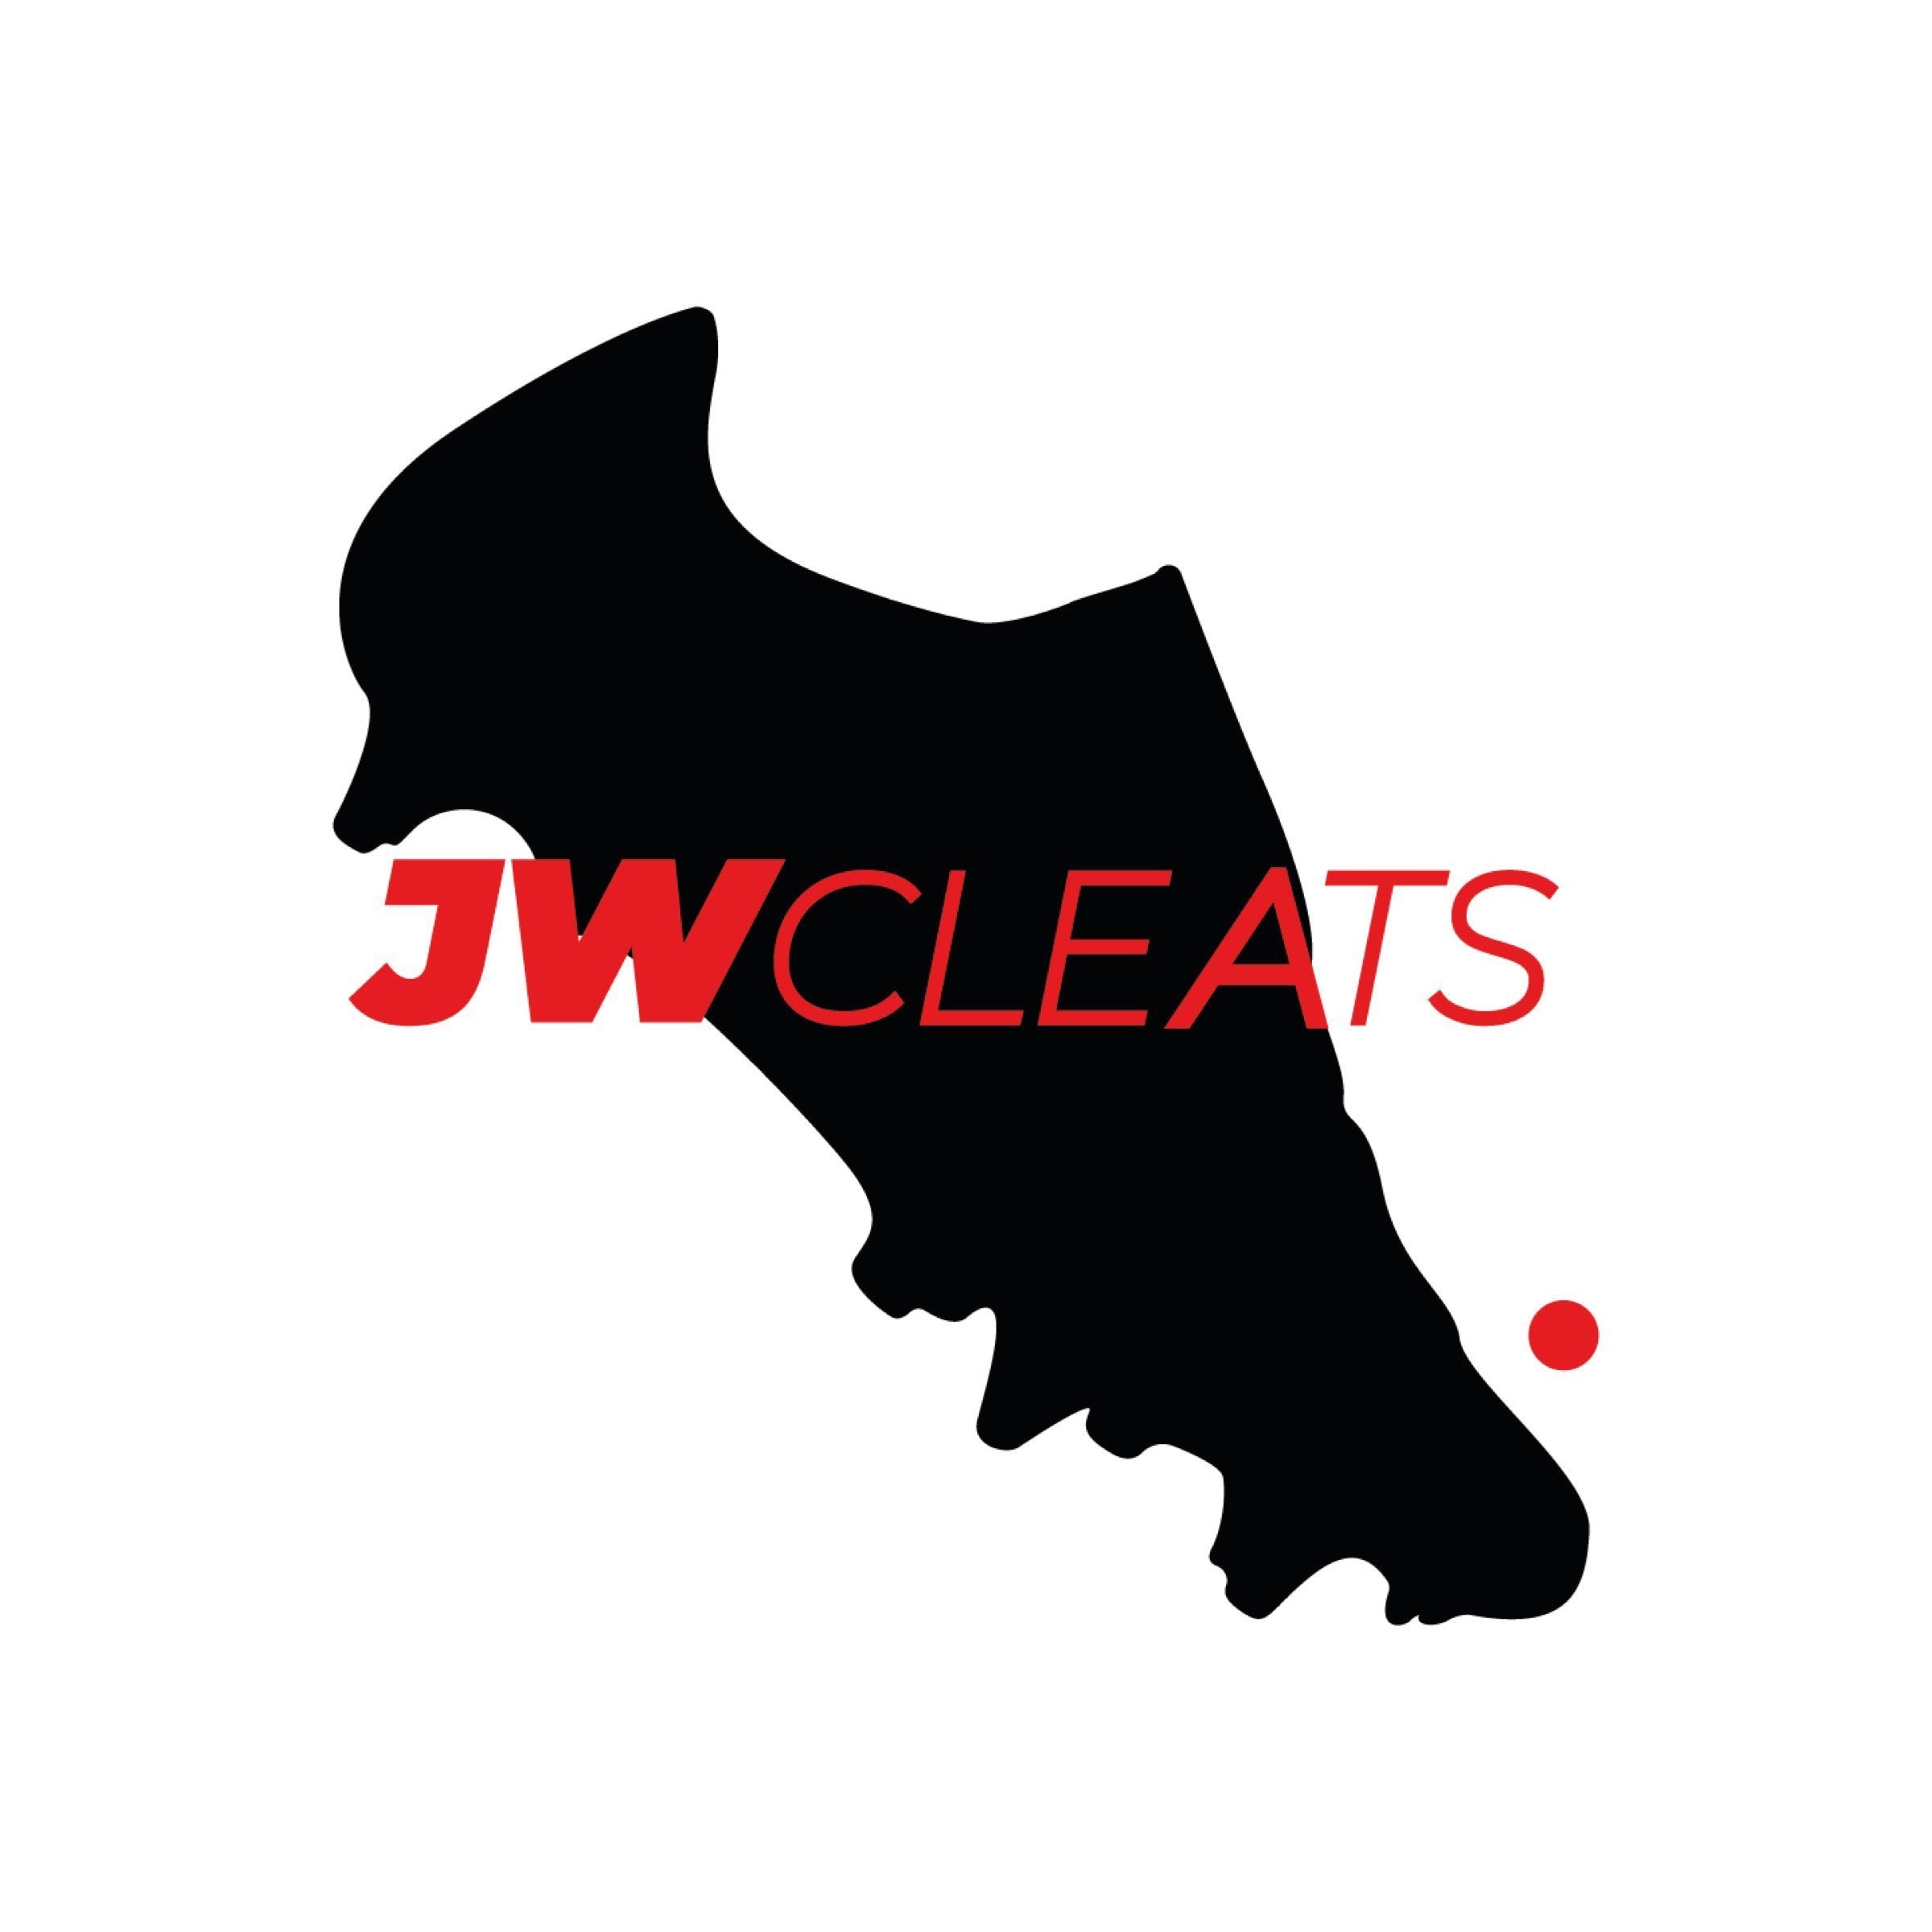 jwcleats